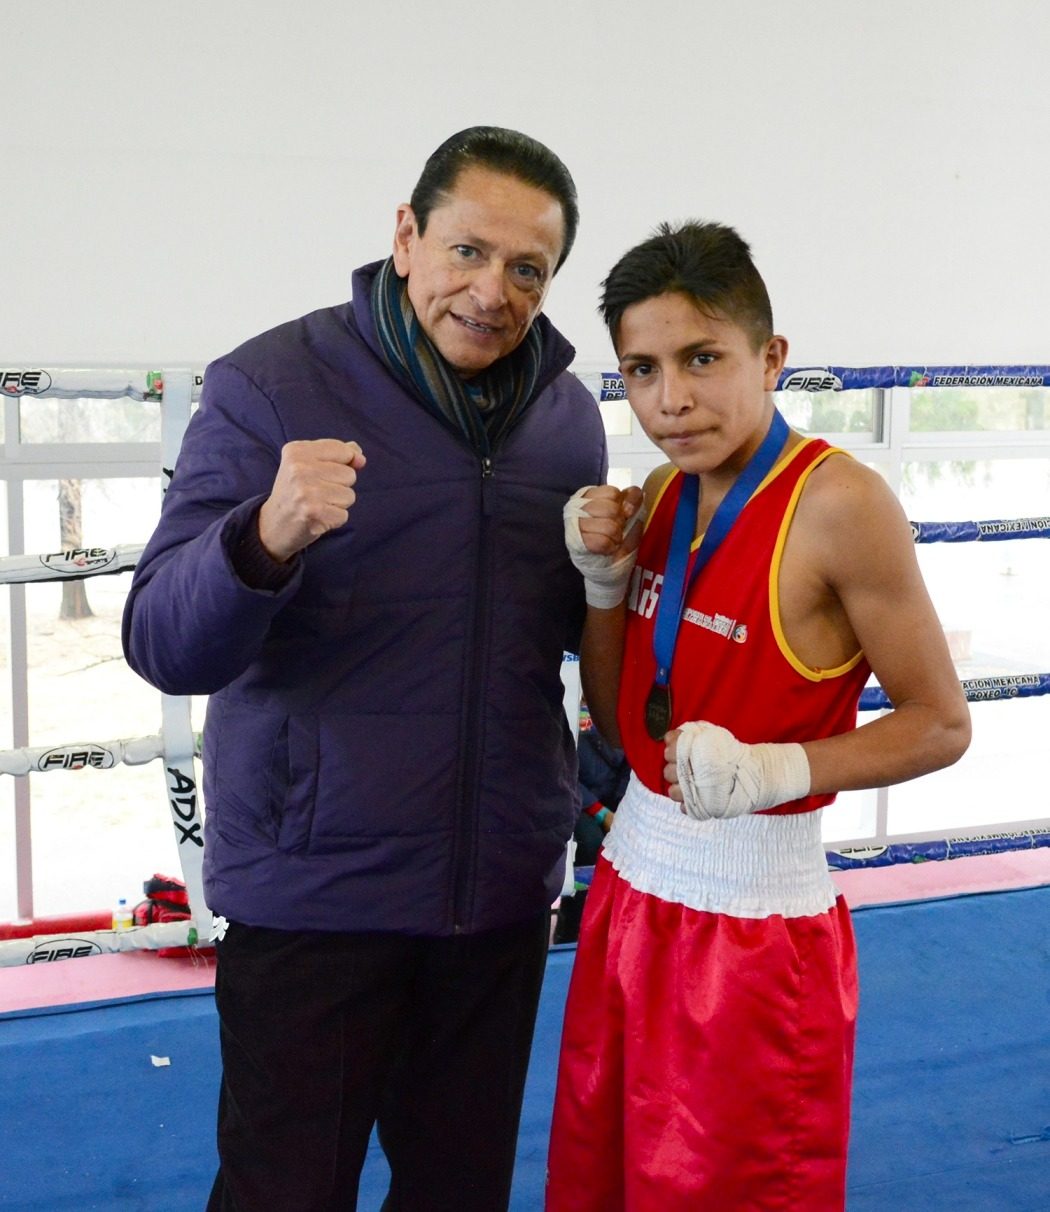 amateur boxeo de federacion mexicana hd photo